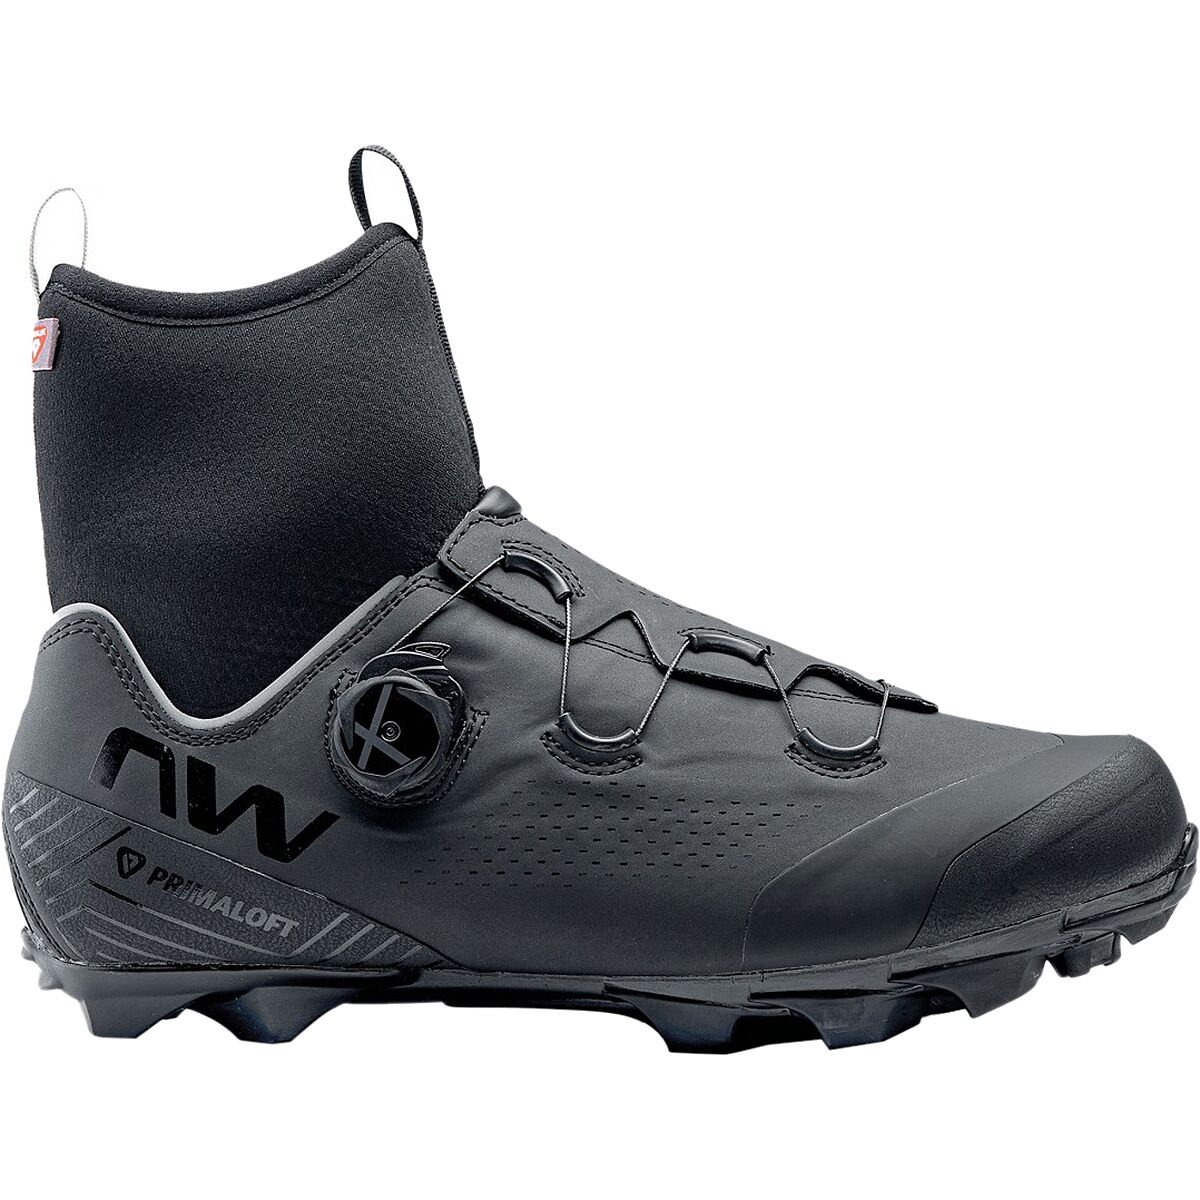 Northwave Magma XC Core Cycling Shoe - Men's